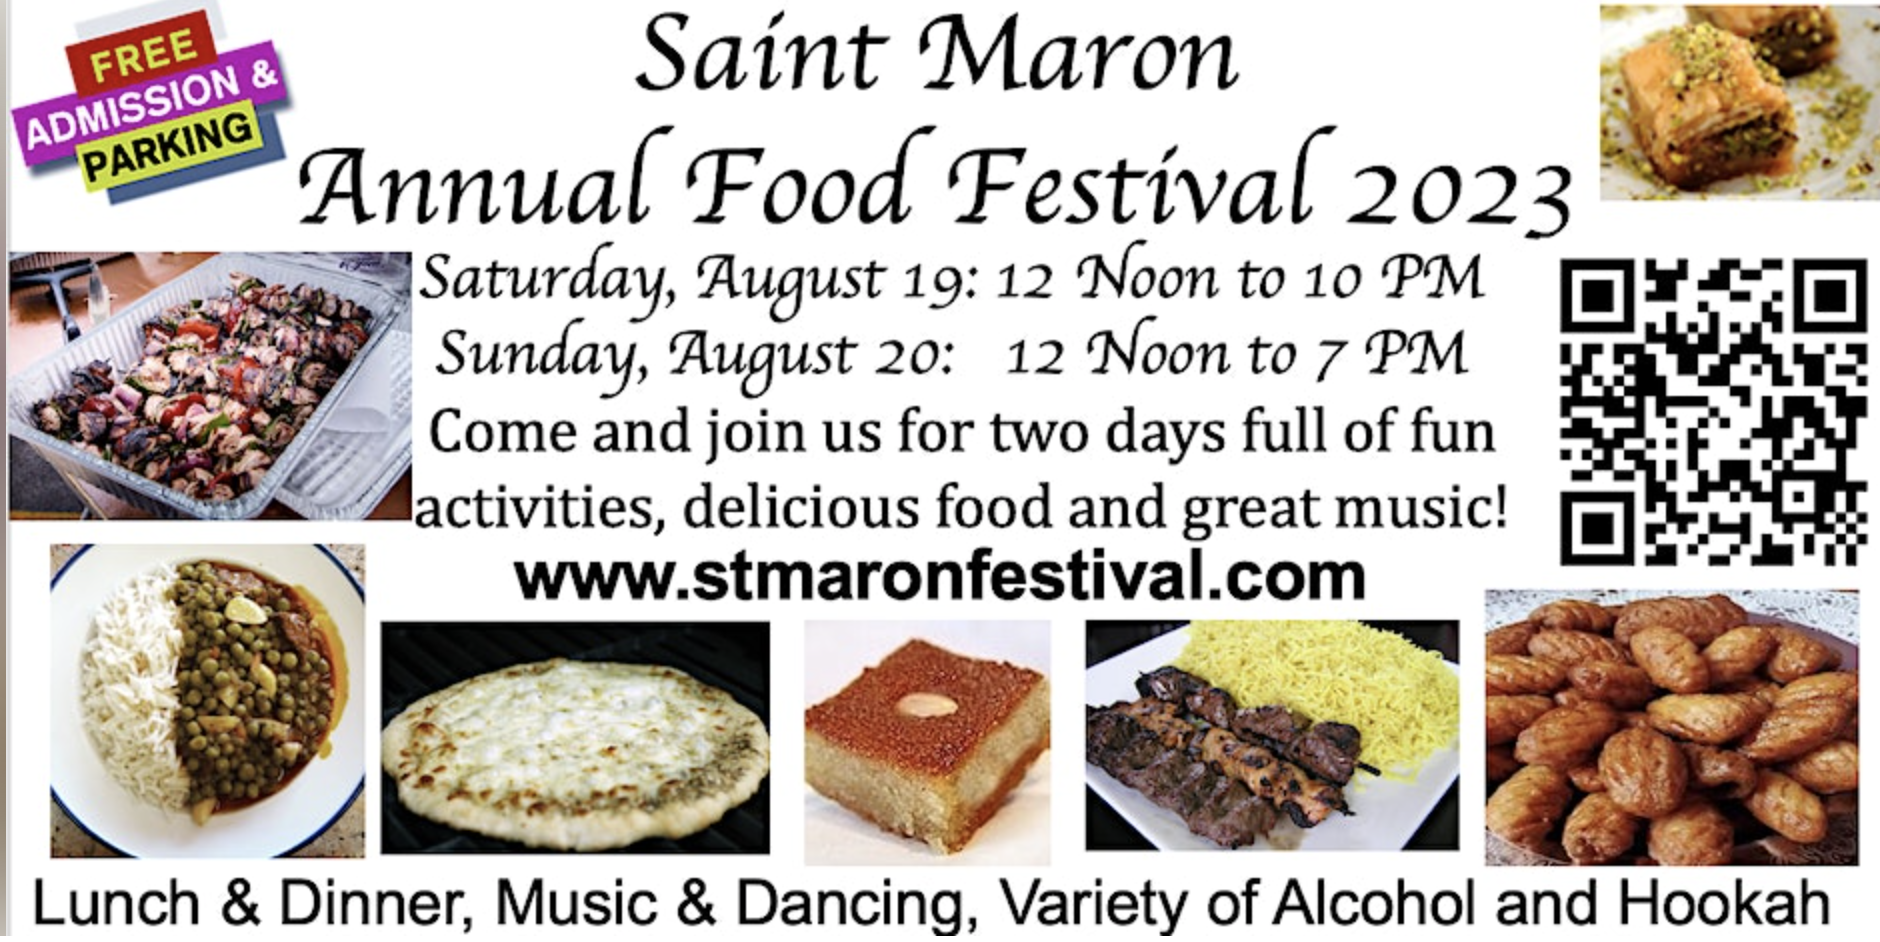 Saint Maron Annual Food Festival